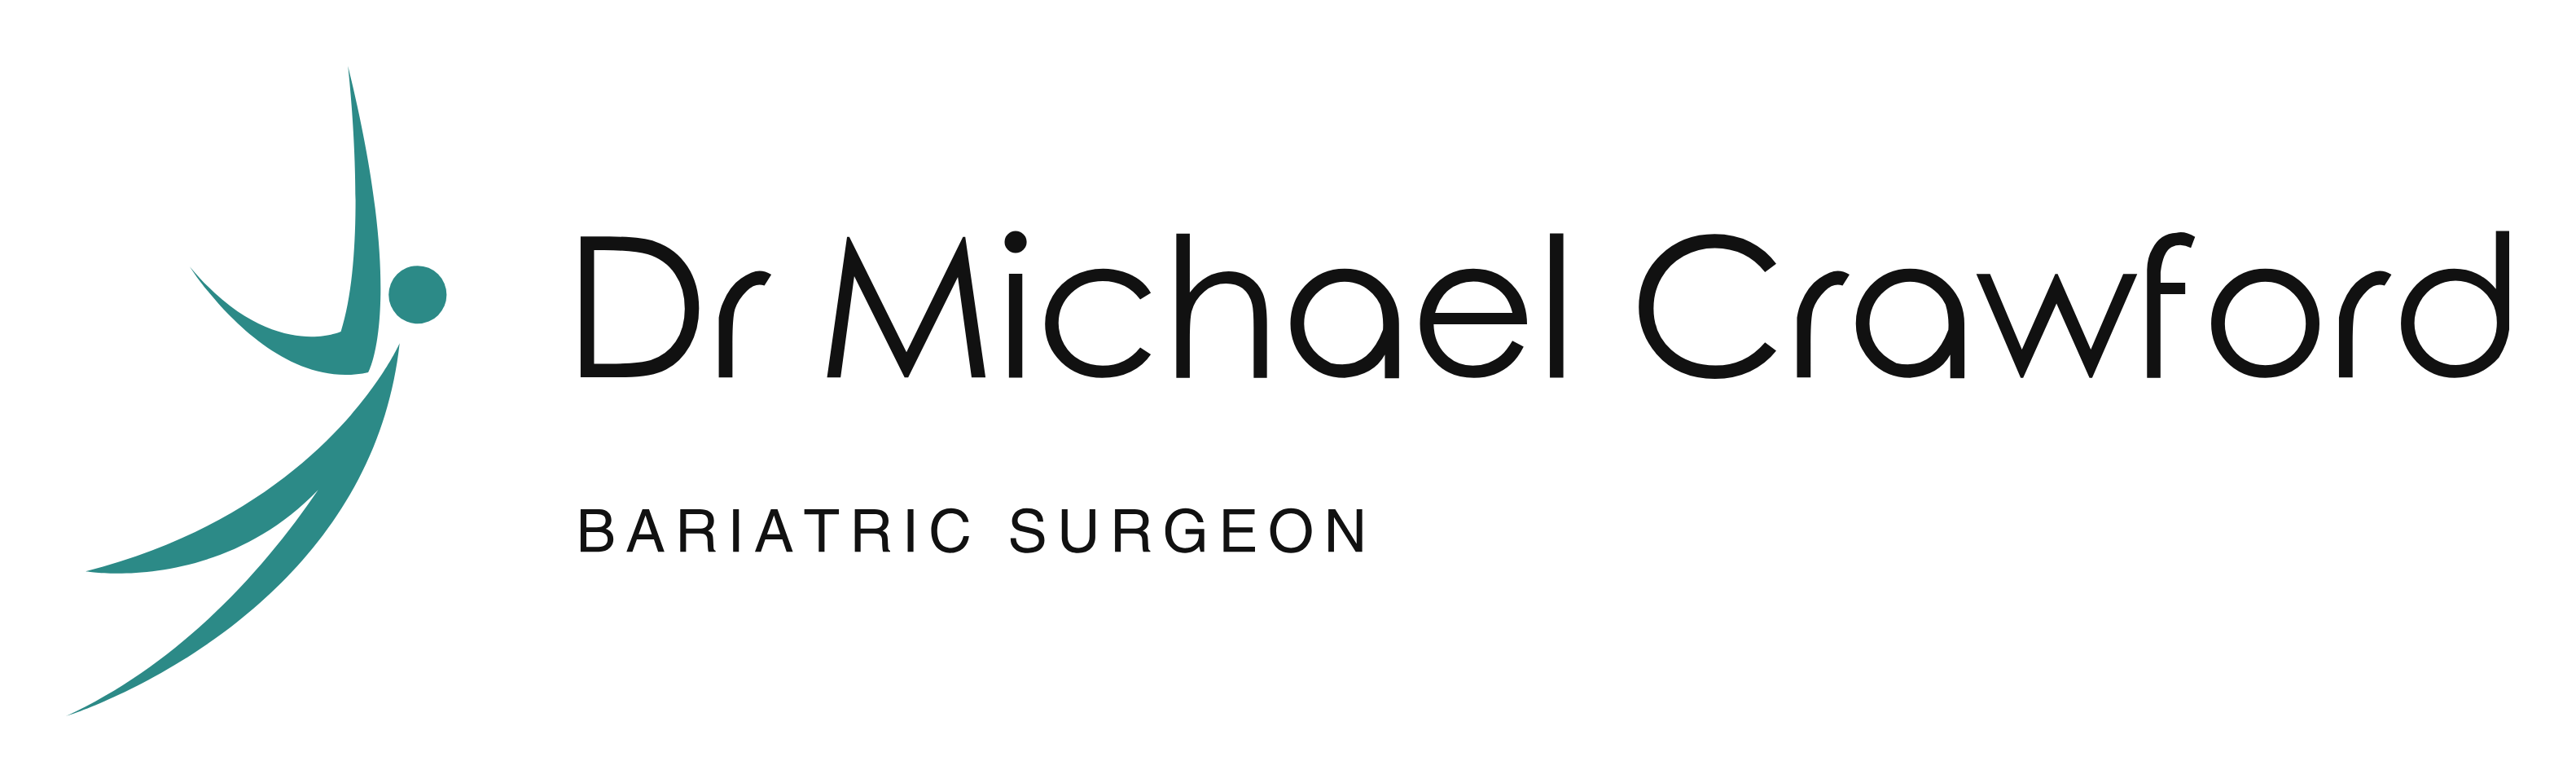 Dr Michael Crawford